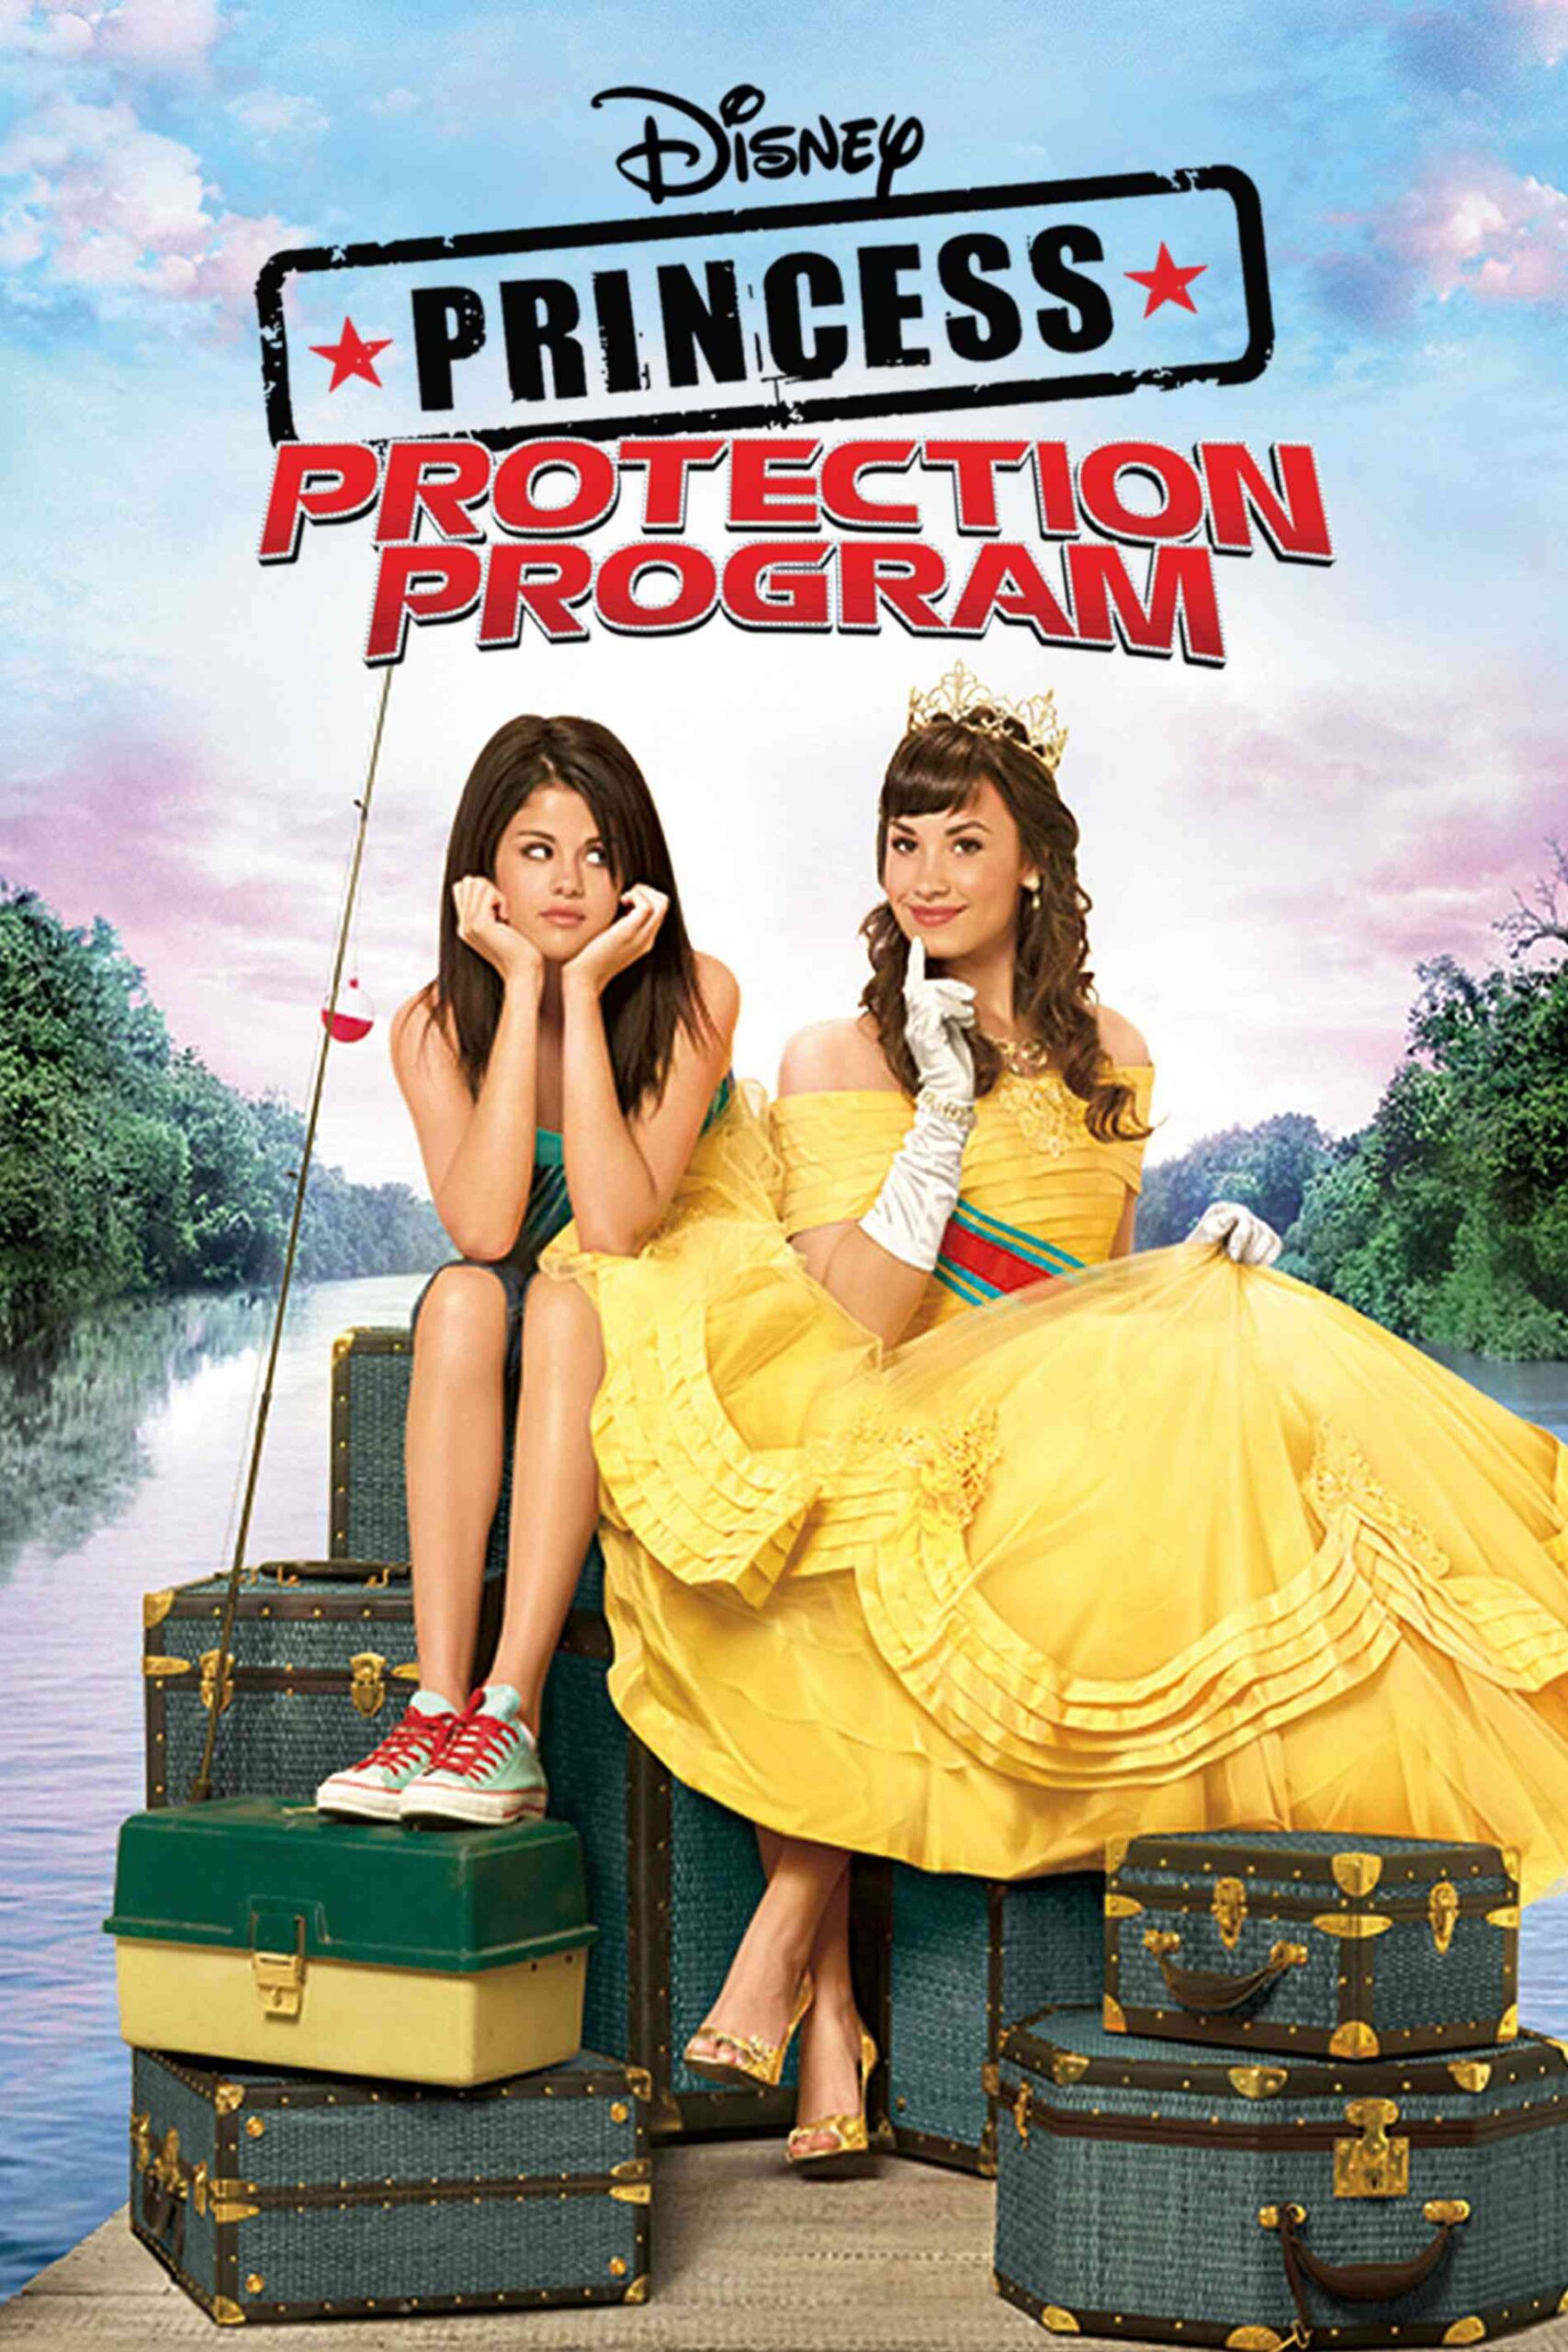 FULL MOVIE: Princess Protection Program (2009)